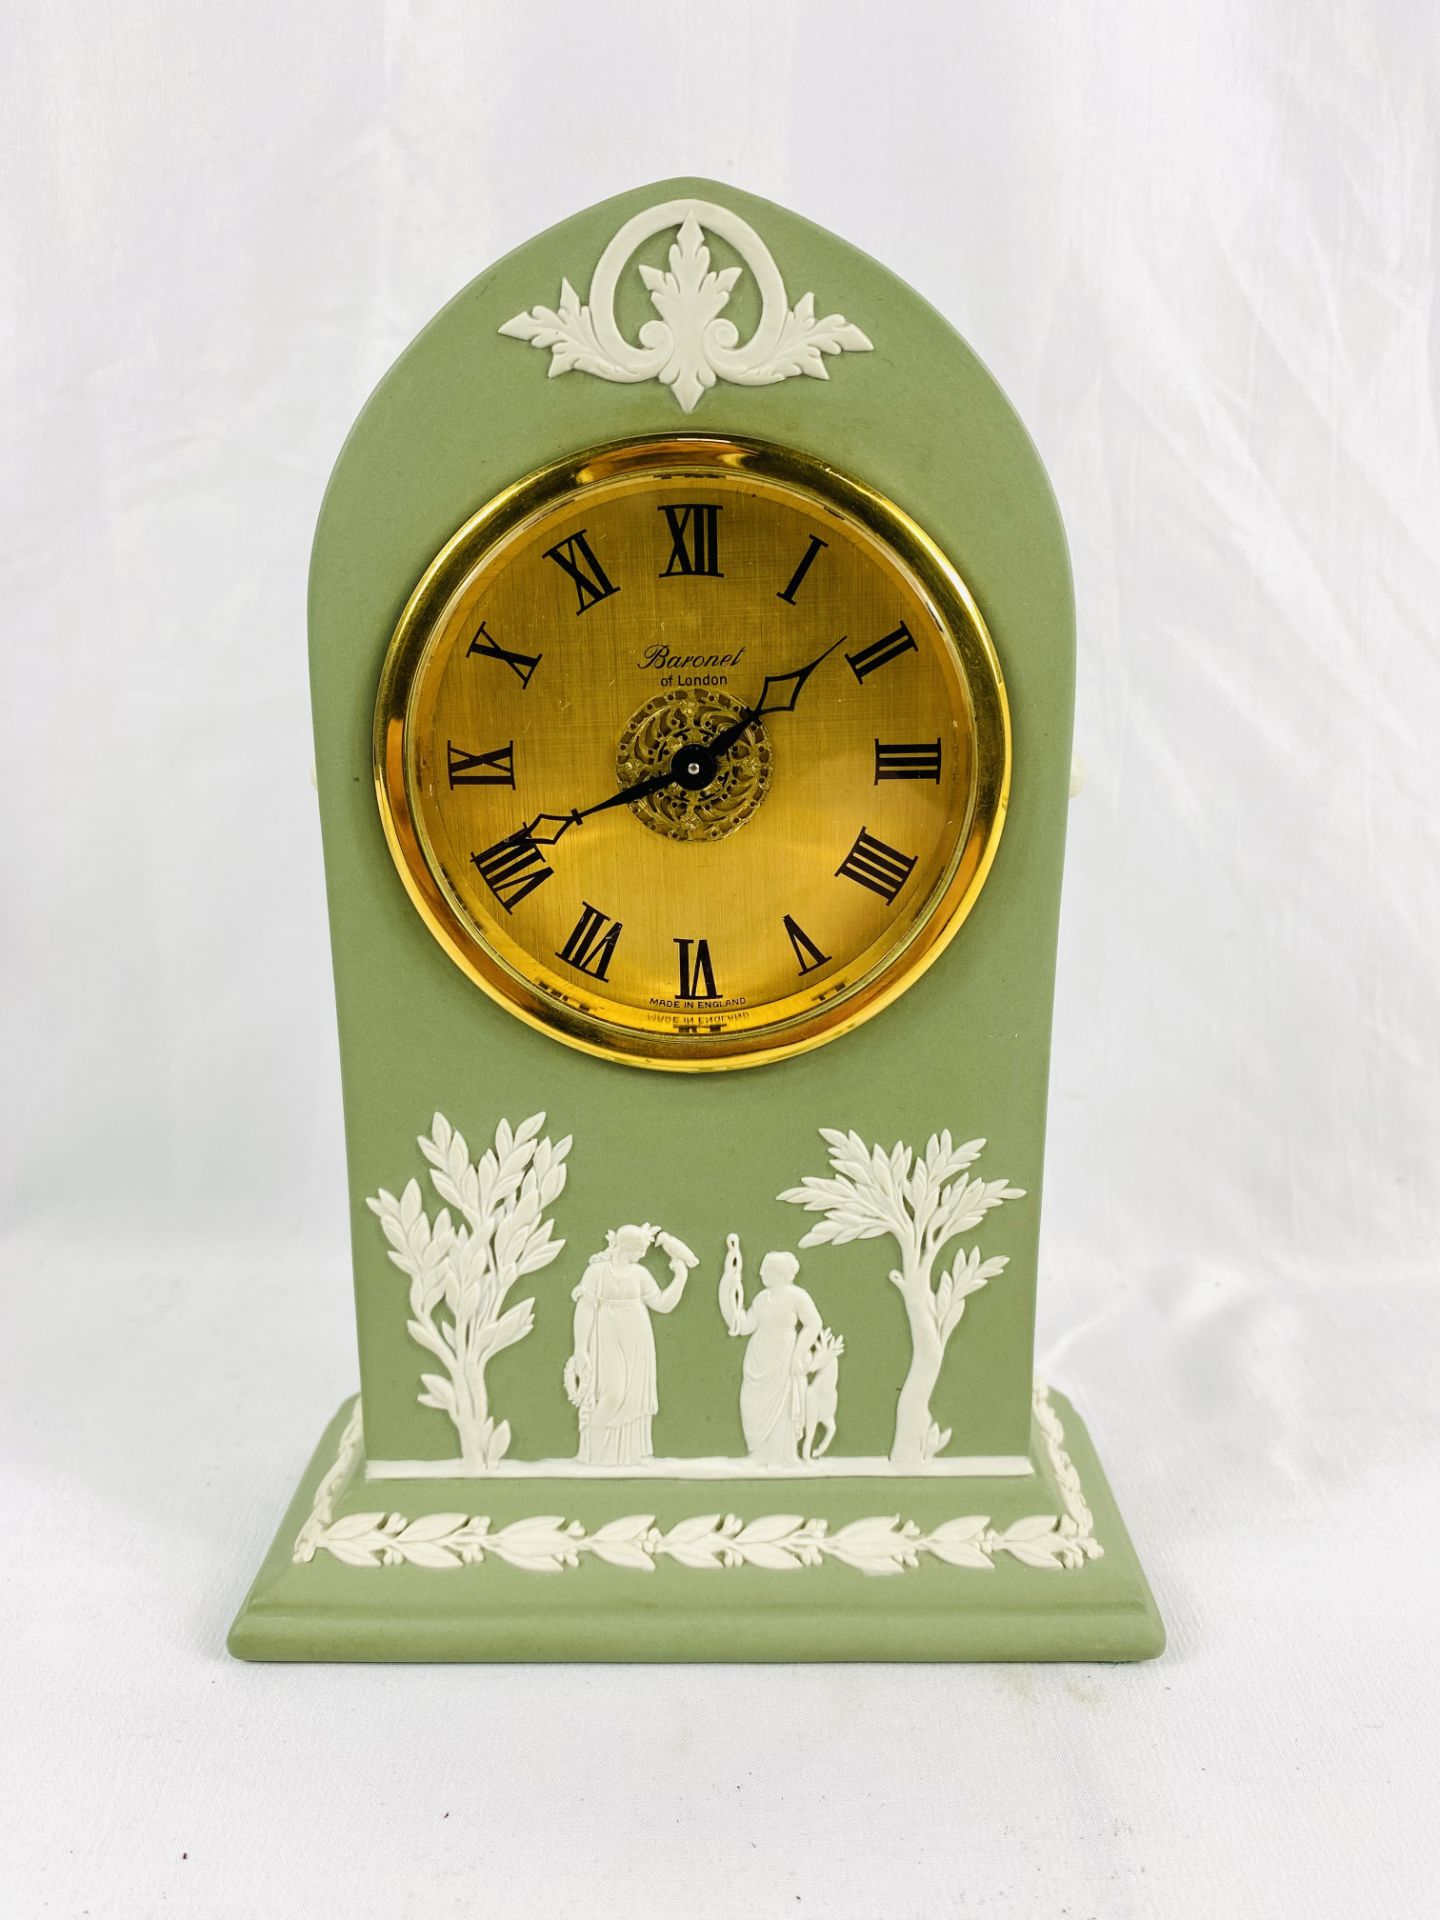 Wedgwood jasperware clock - Image 2 of 5